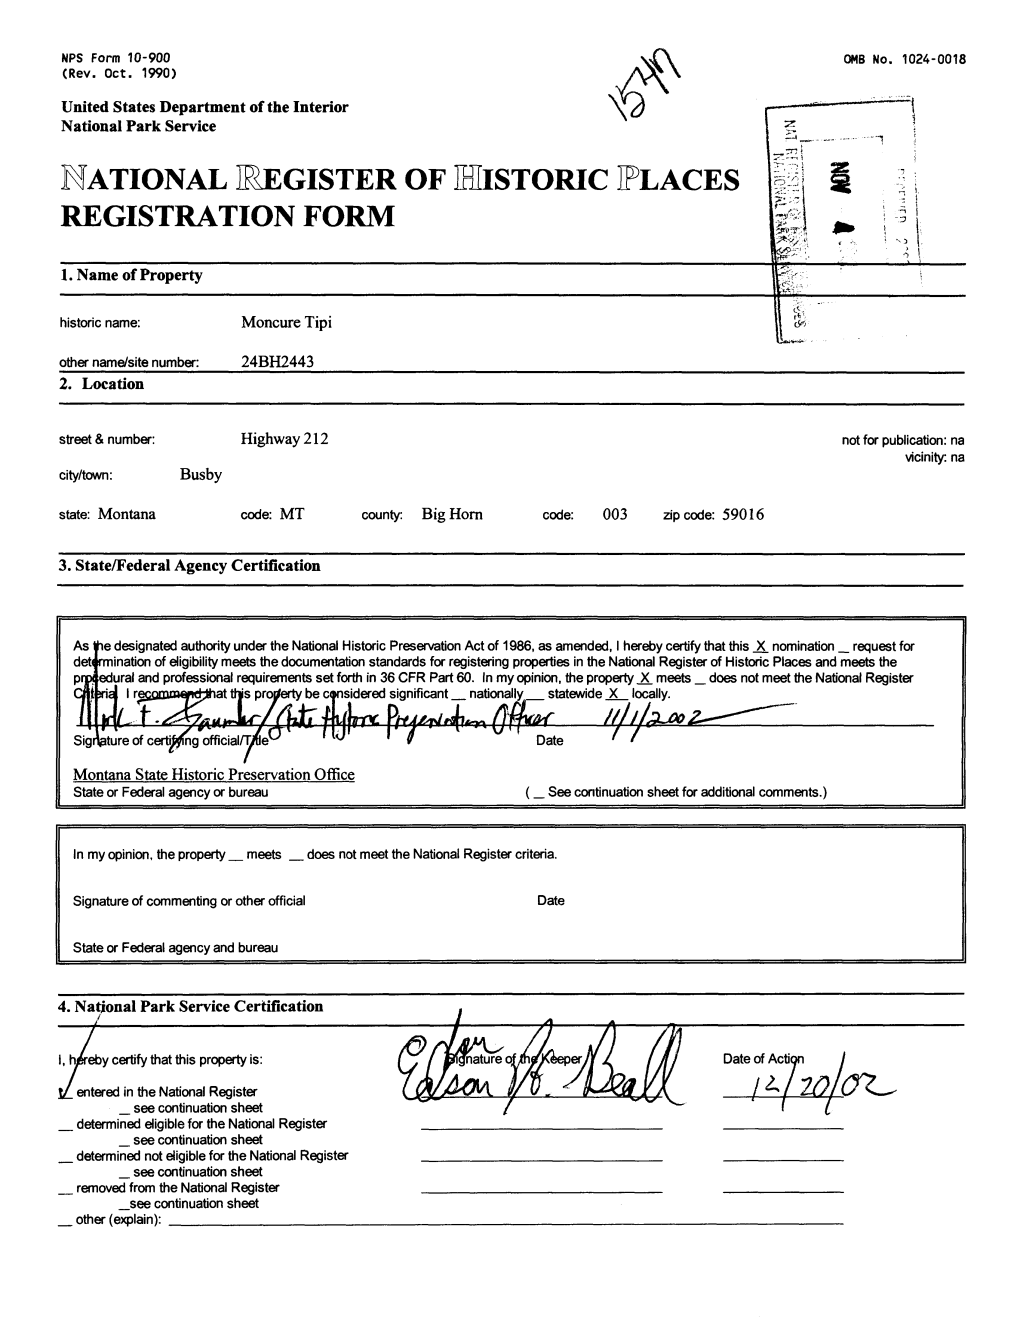 National Eegister of Historic Places Registration Form